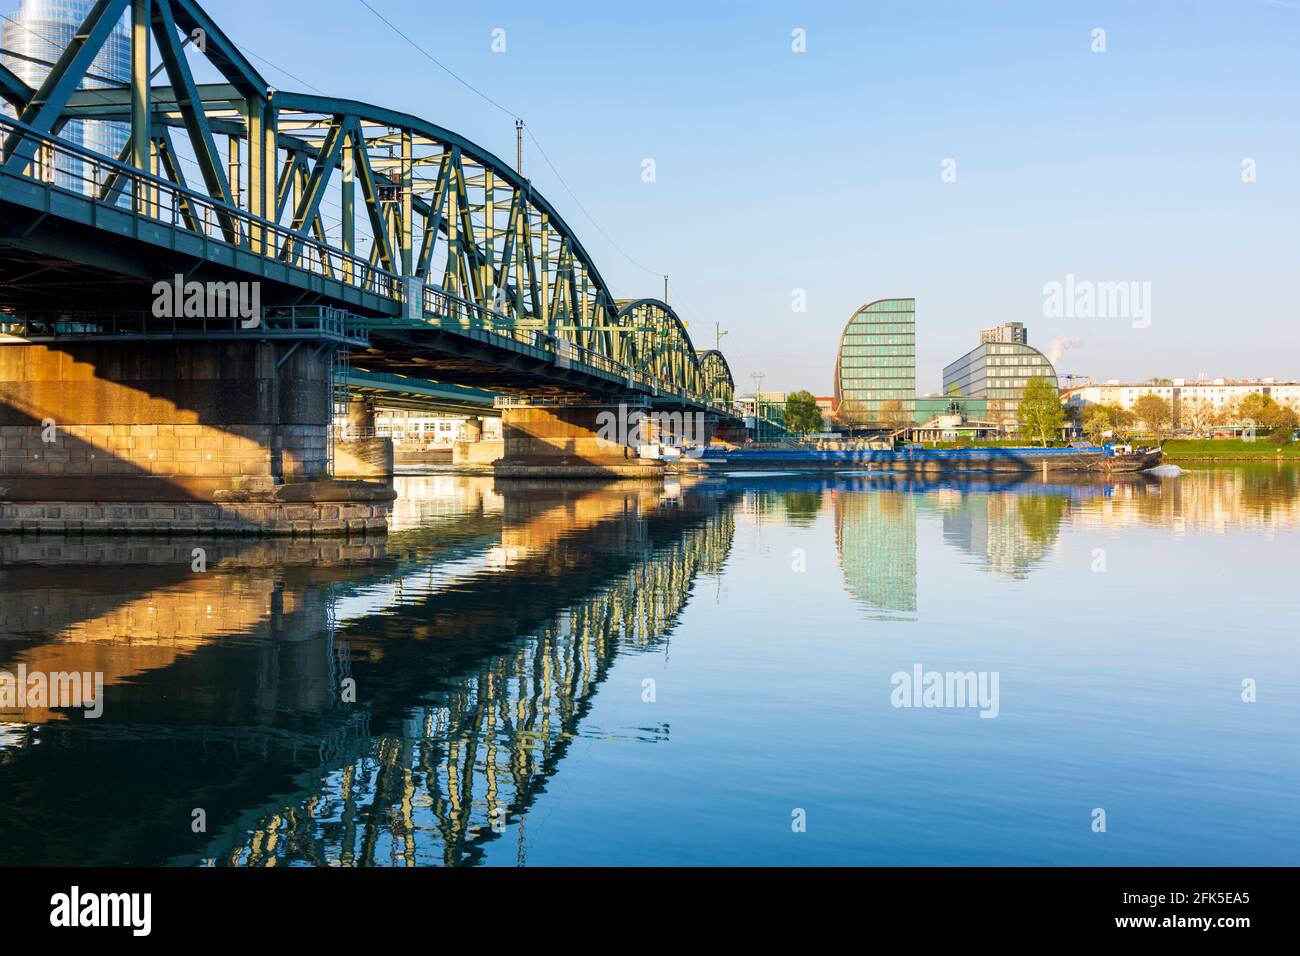 Wien, Vienna: fiume Donau (Danubio), ponte Nordbahnbrücke, nave da carico nel 22. Donaustadt, Vienna, Austria Foto Stock